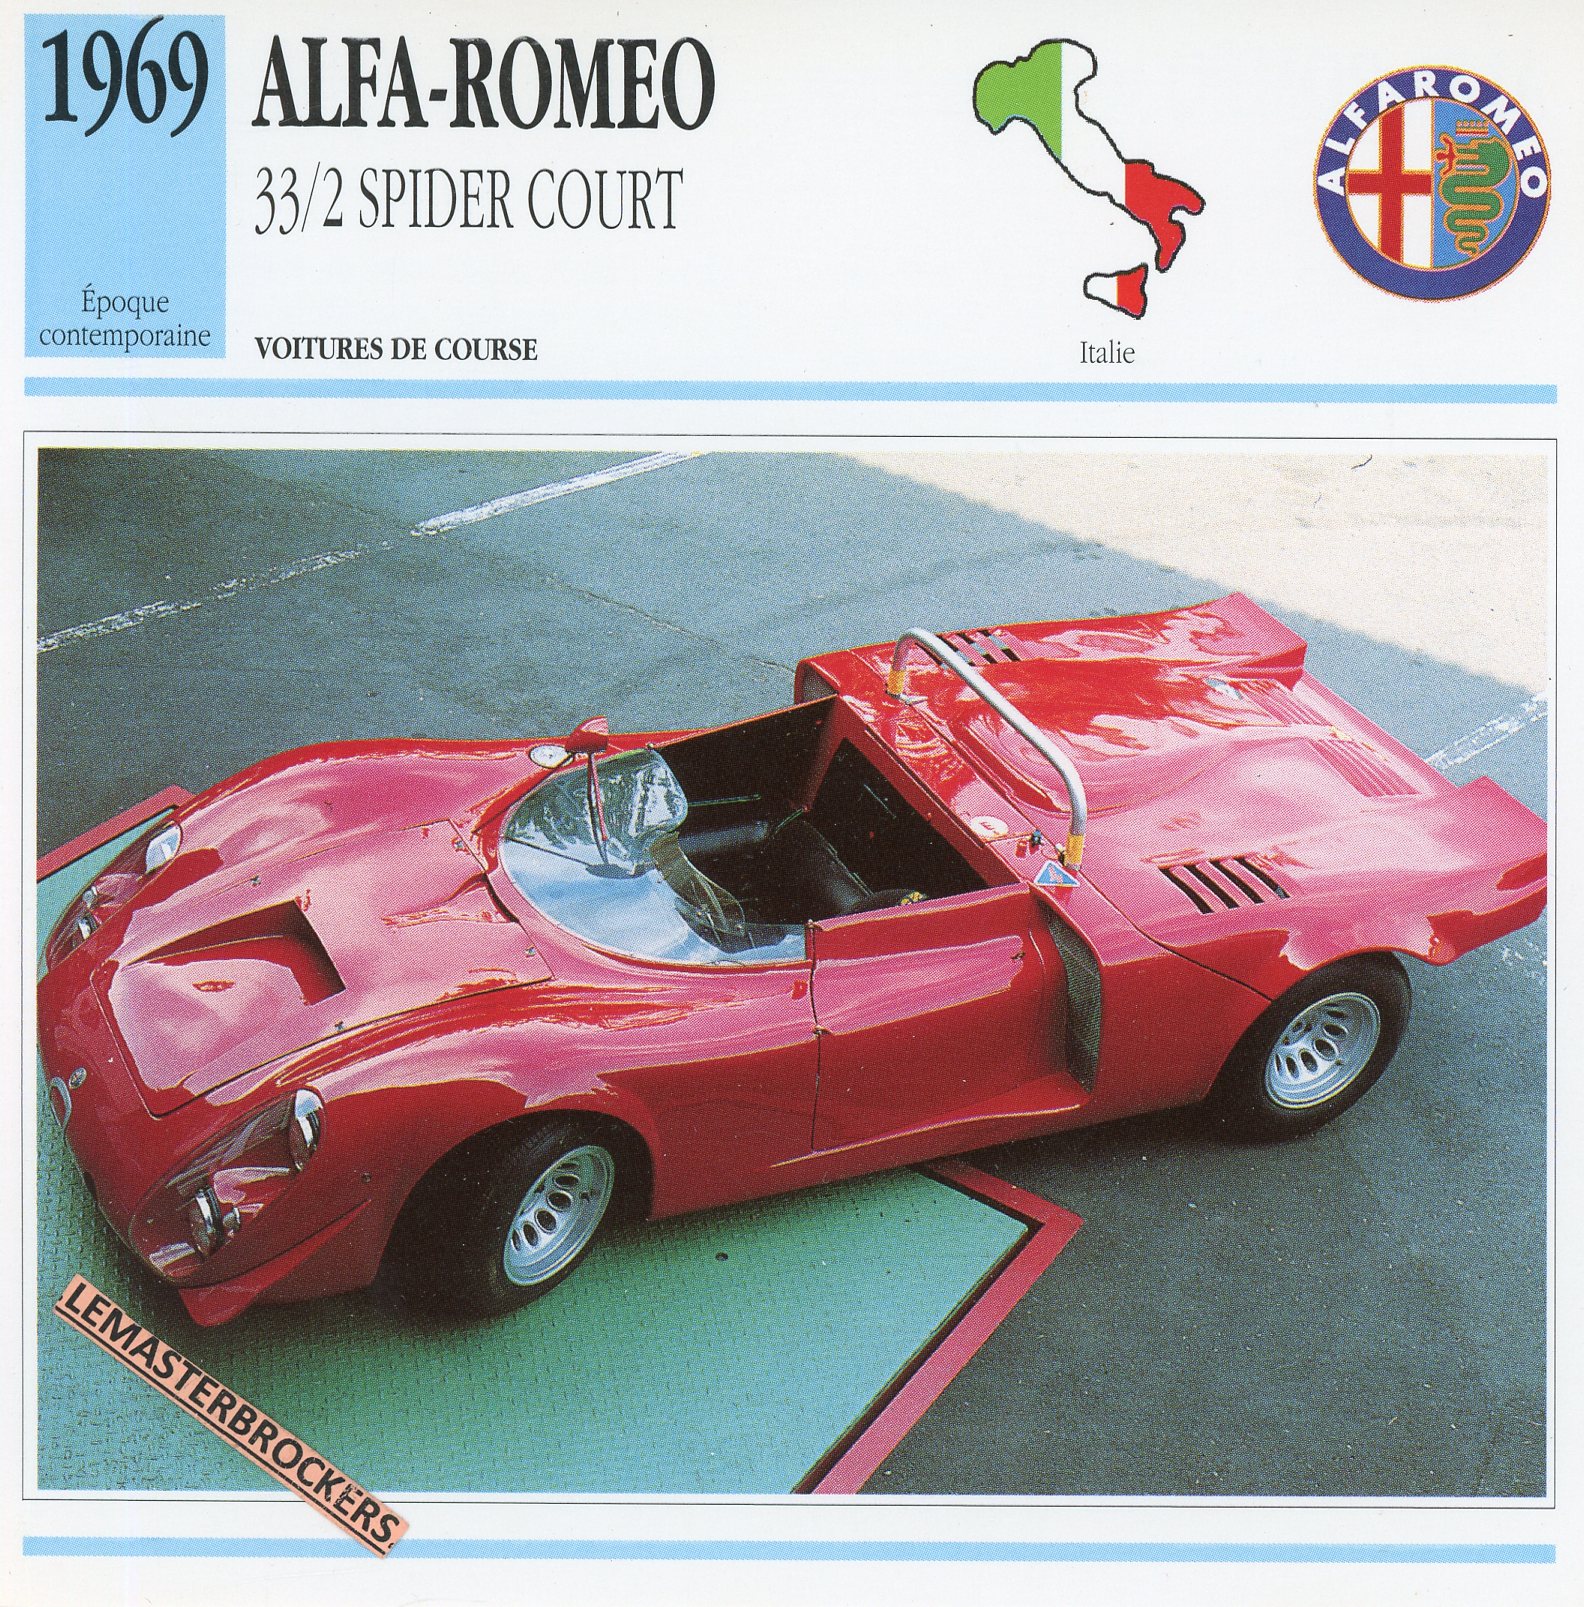 ALFA-ROMEO-33/2-SPIDER-COURT-1969-FICHE-AUTO-ATLAS-LEMASTERBROCKERS